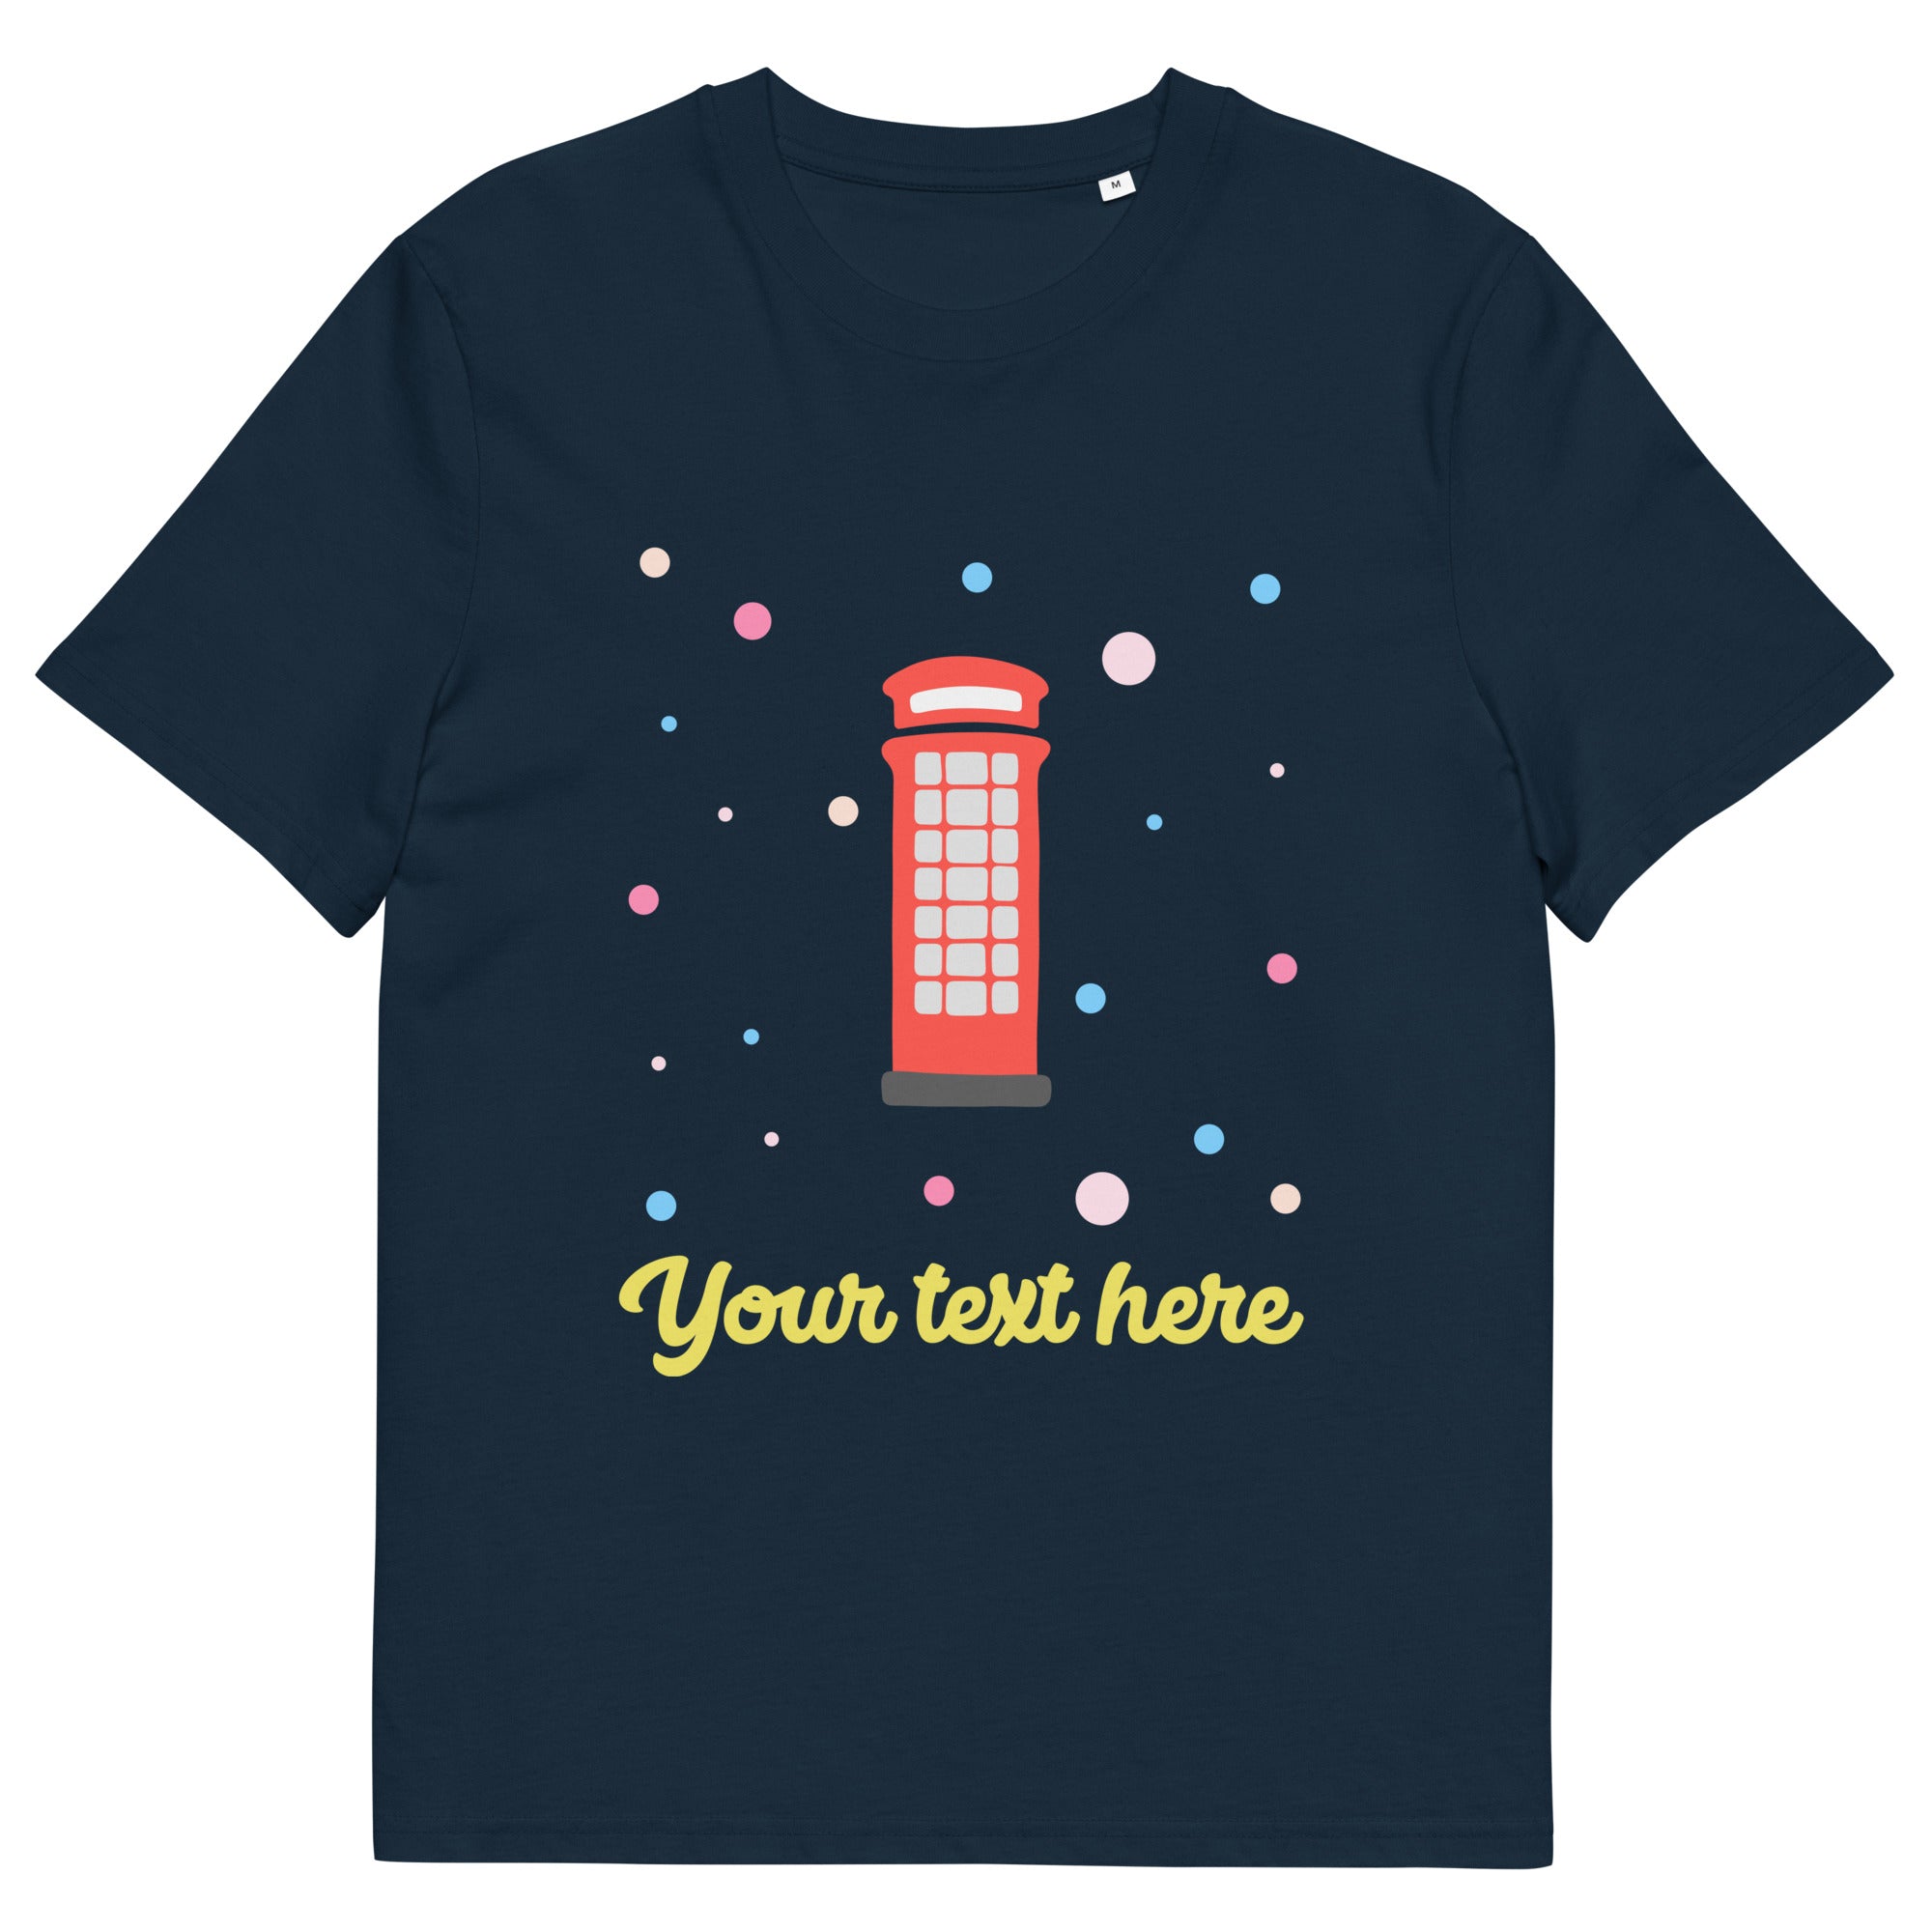 Personalised Custom Text - Organic Cotton Adults Unisex T-Shirt - London Doodles - Telephone Box - Navy